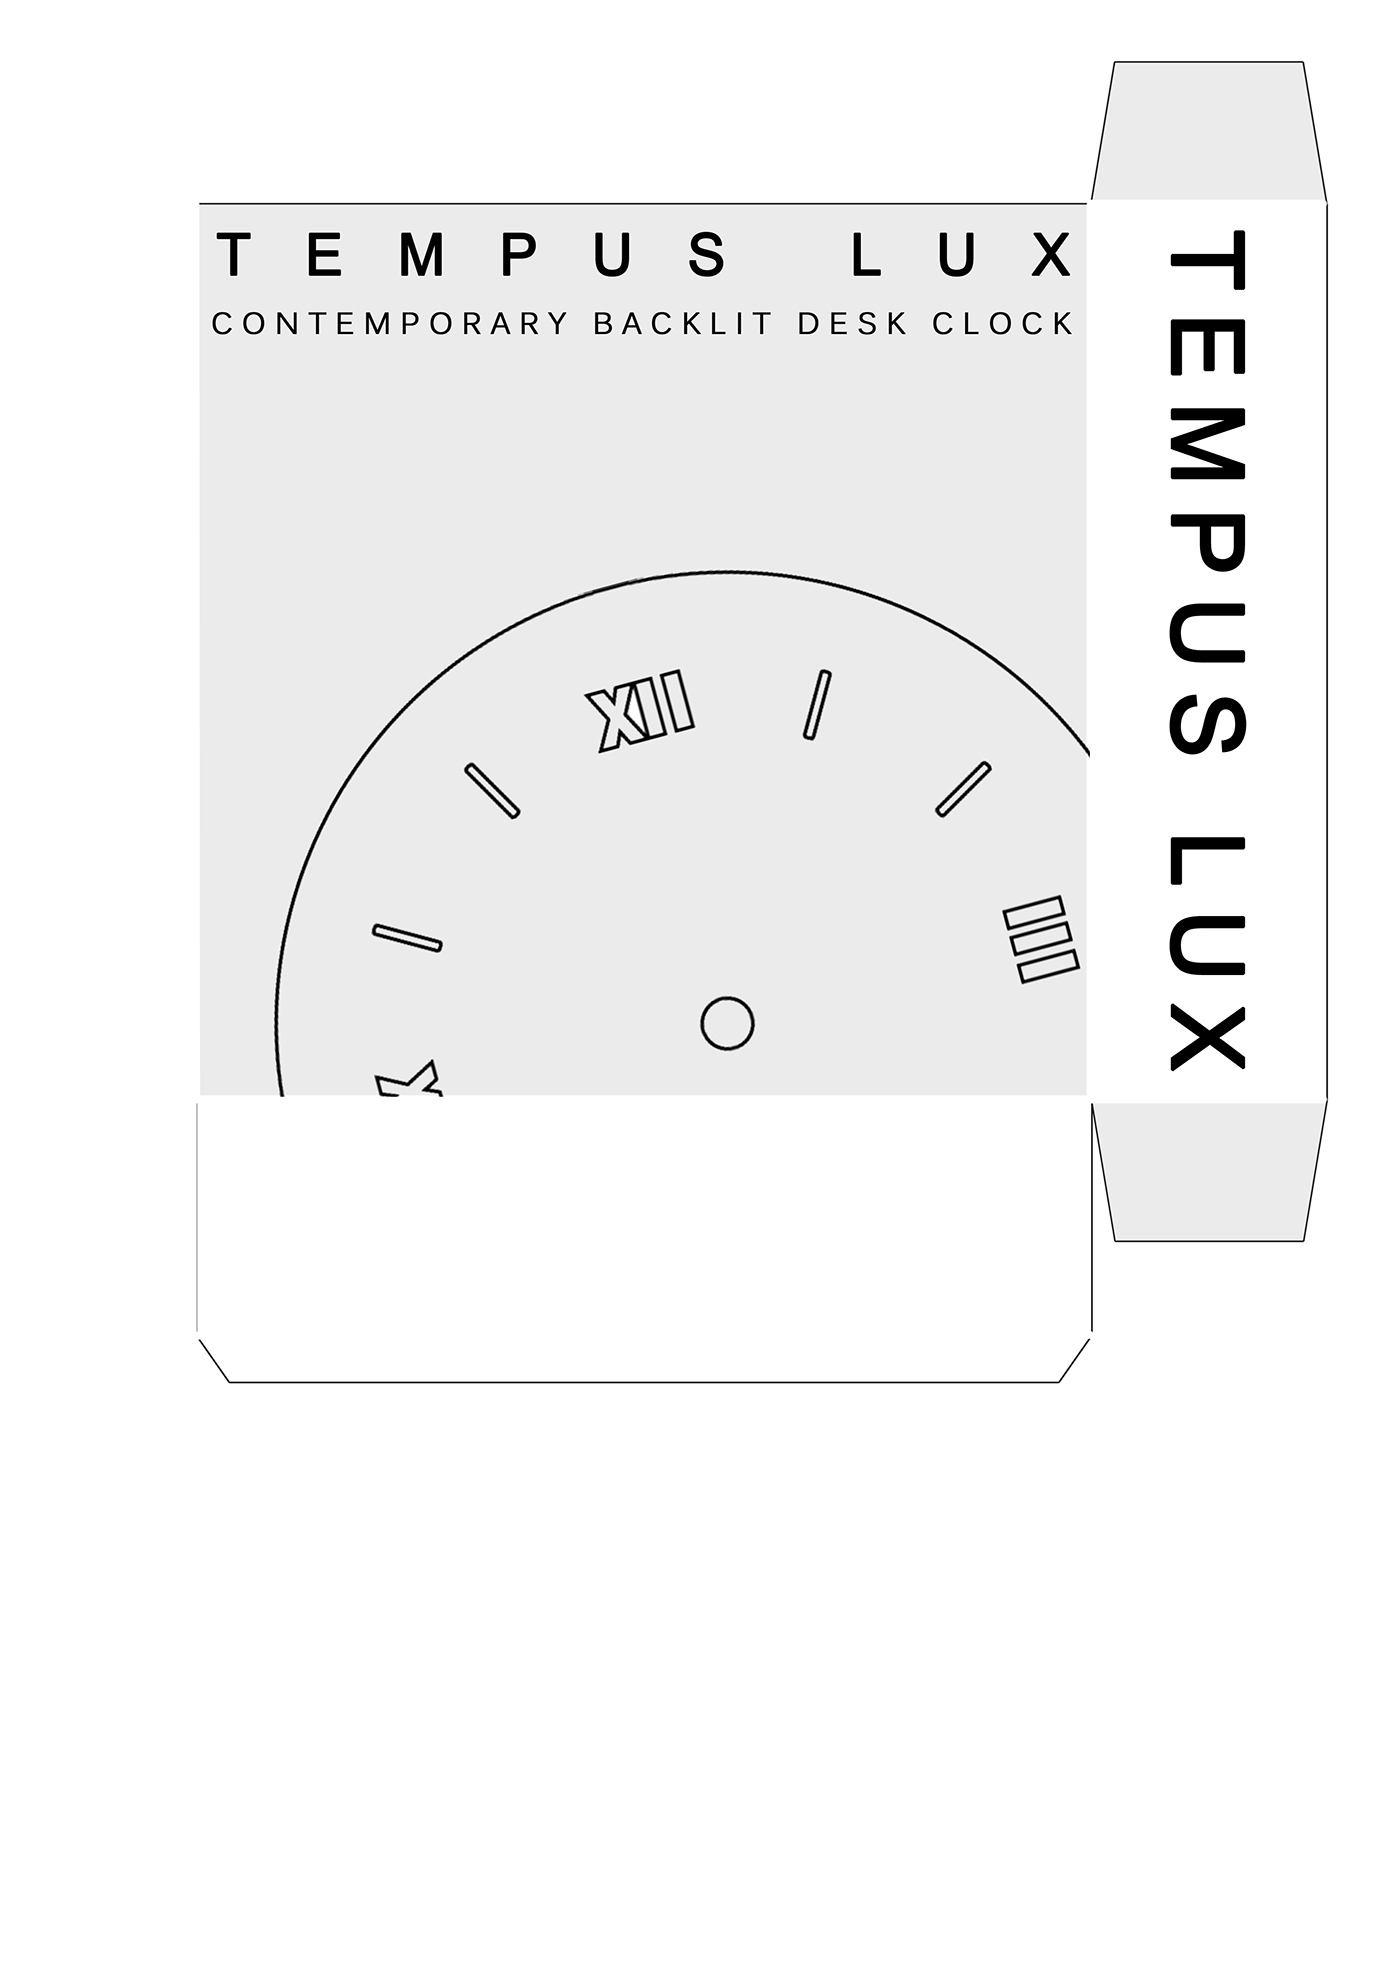 tempus Lux zack holmes design clock 3d printing minimalist led Victoria University